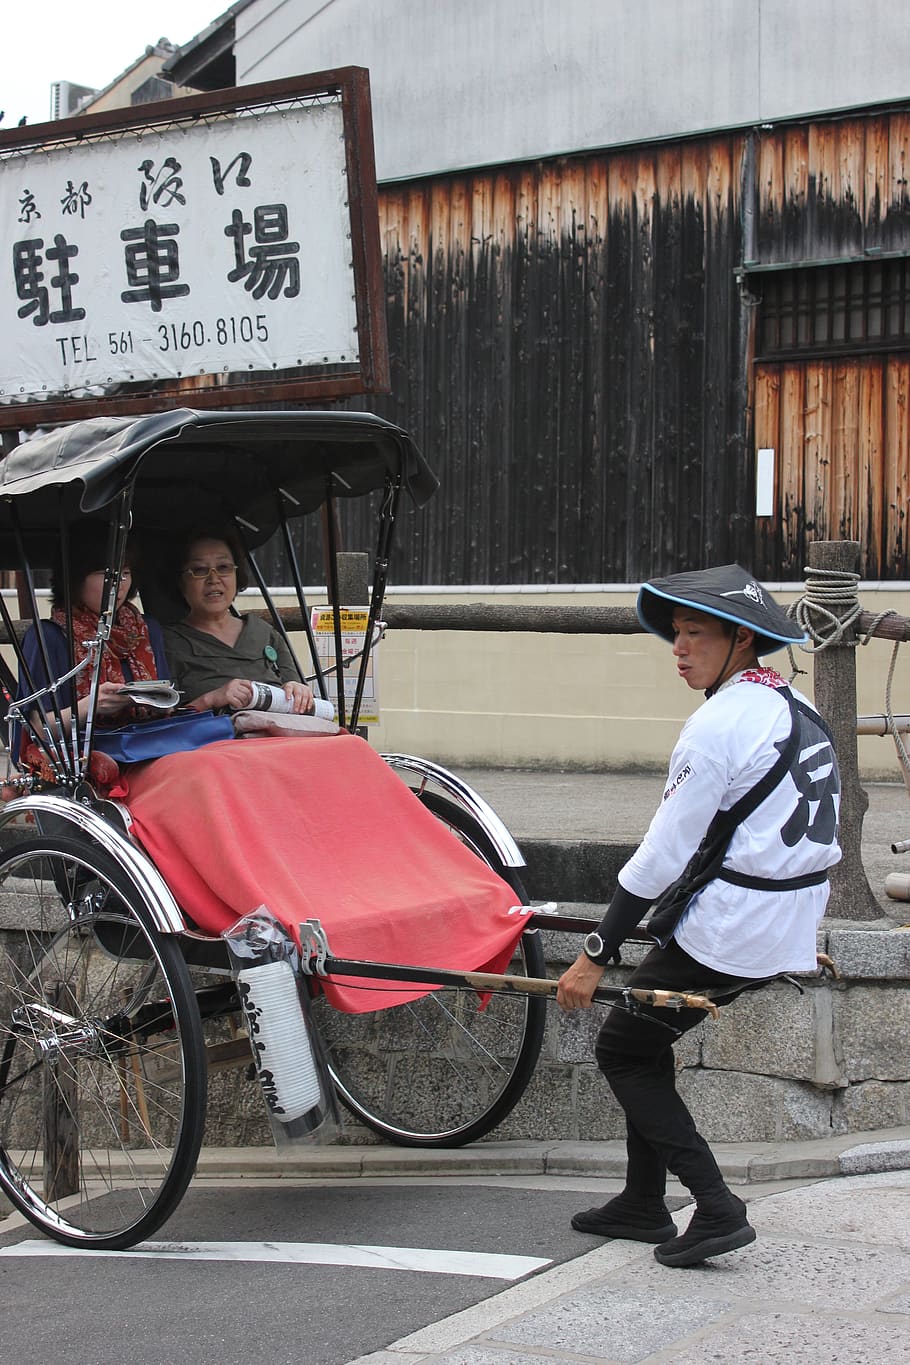 rickshaw, rickshaw man, service, customer, pull, two-wheeler, transportation, passengers, kyoto, japan